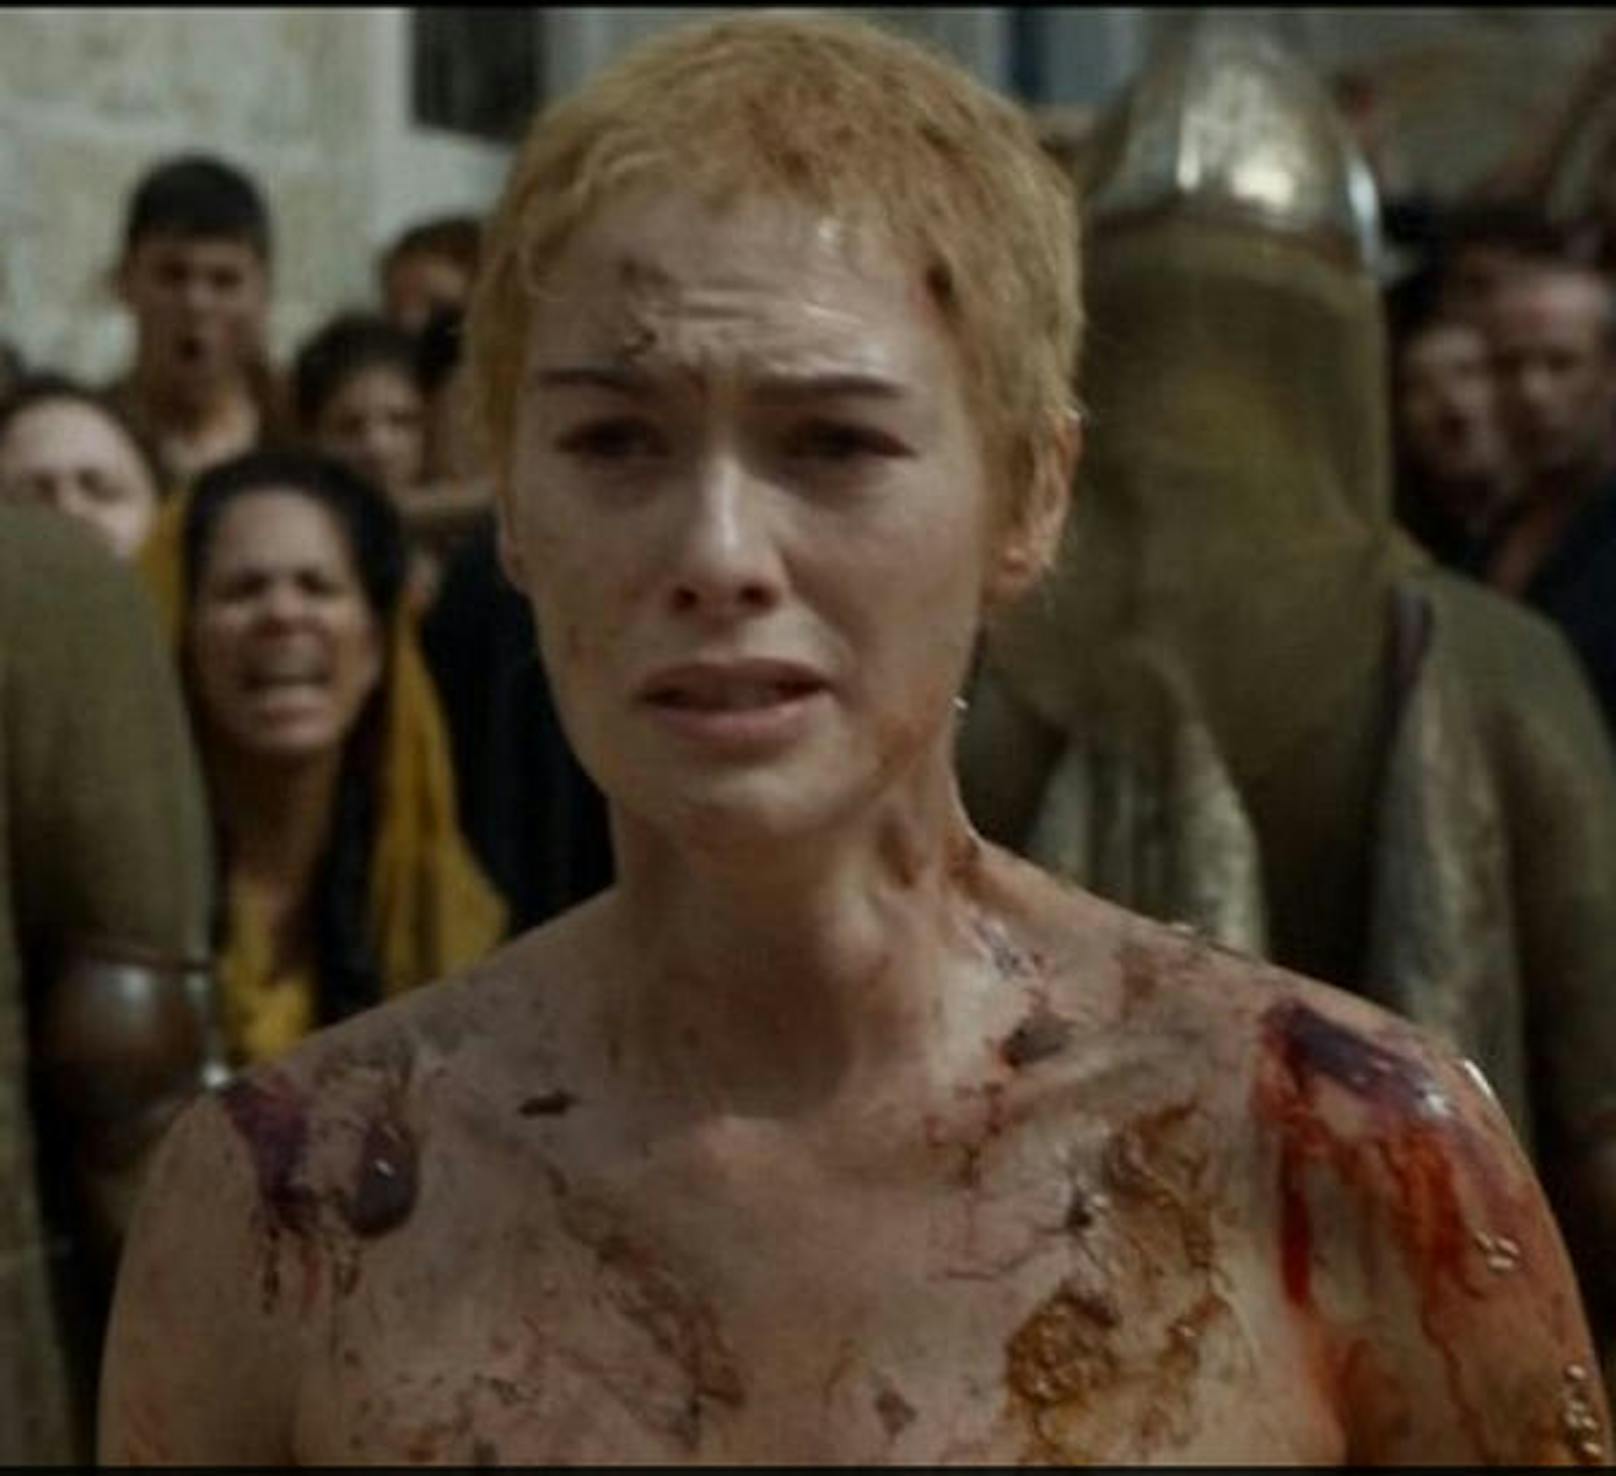 Lena Headey als Cersei Lannister in "Game of Thrones"